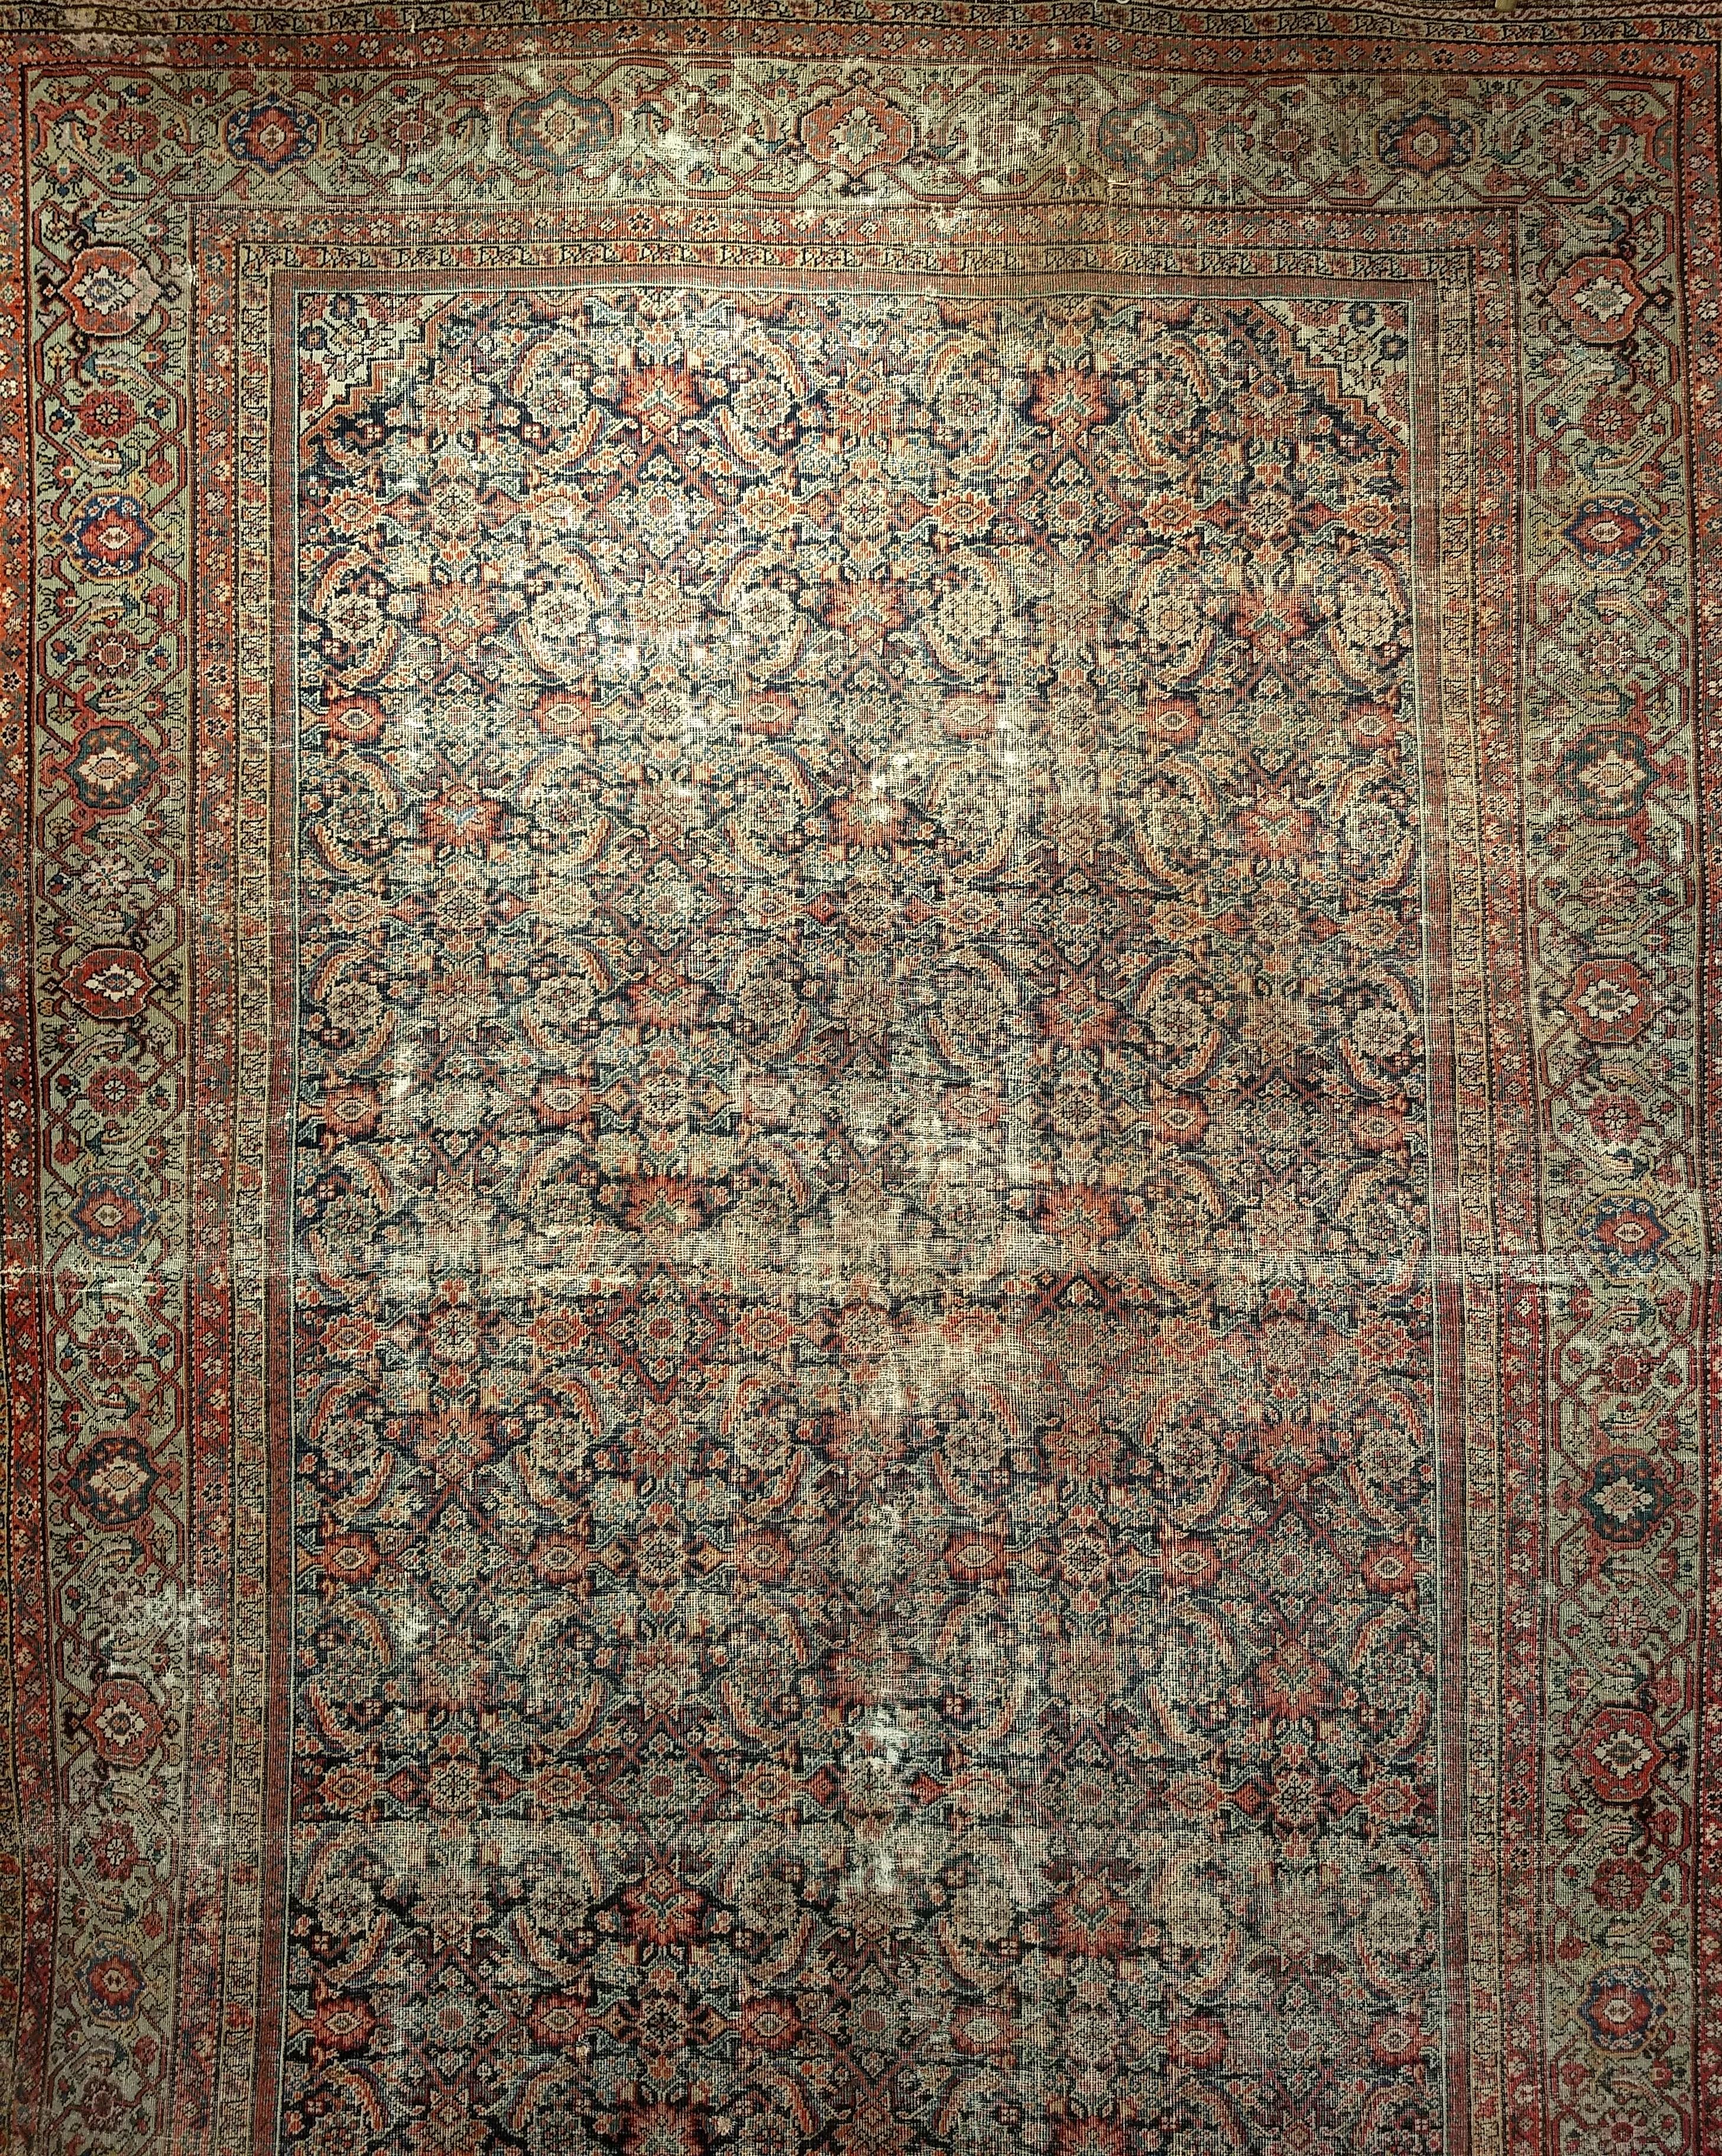 19th Century Persian Farahan in Allover Herati Pattern in Navy, Green, Burgundy